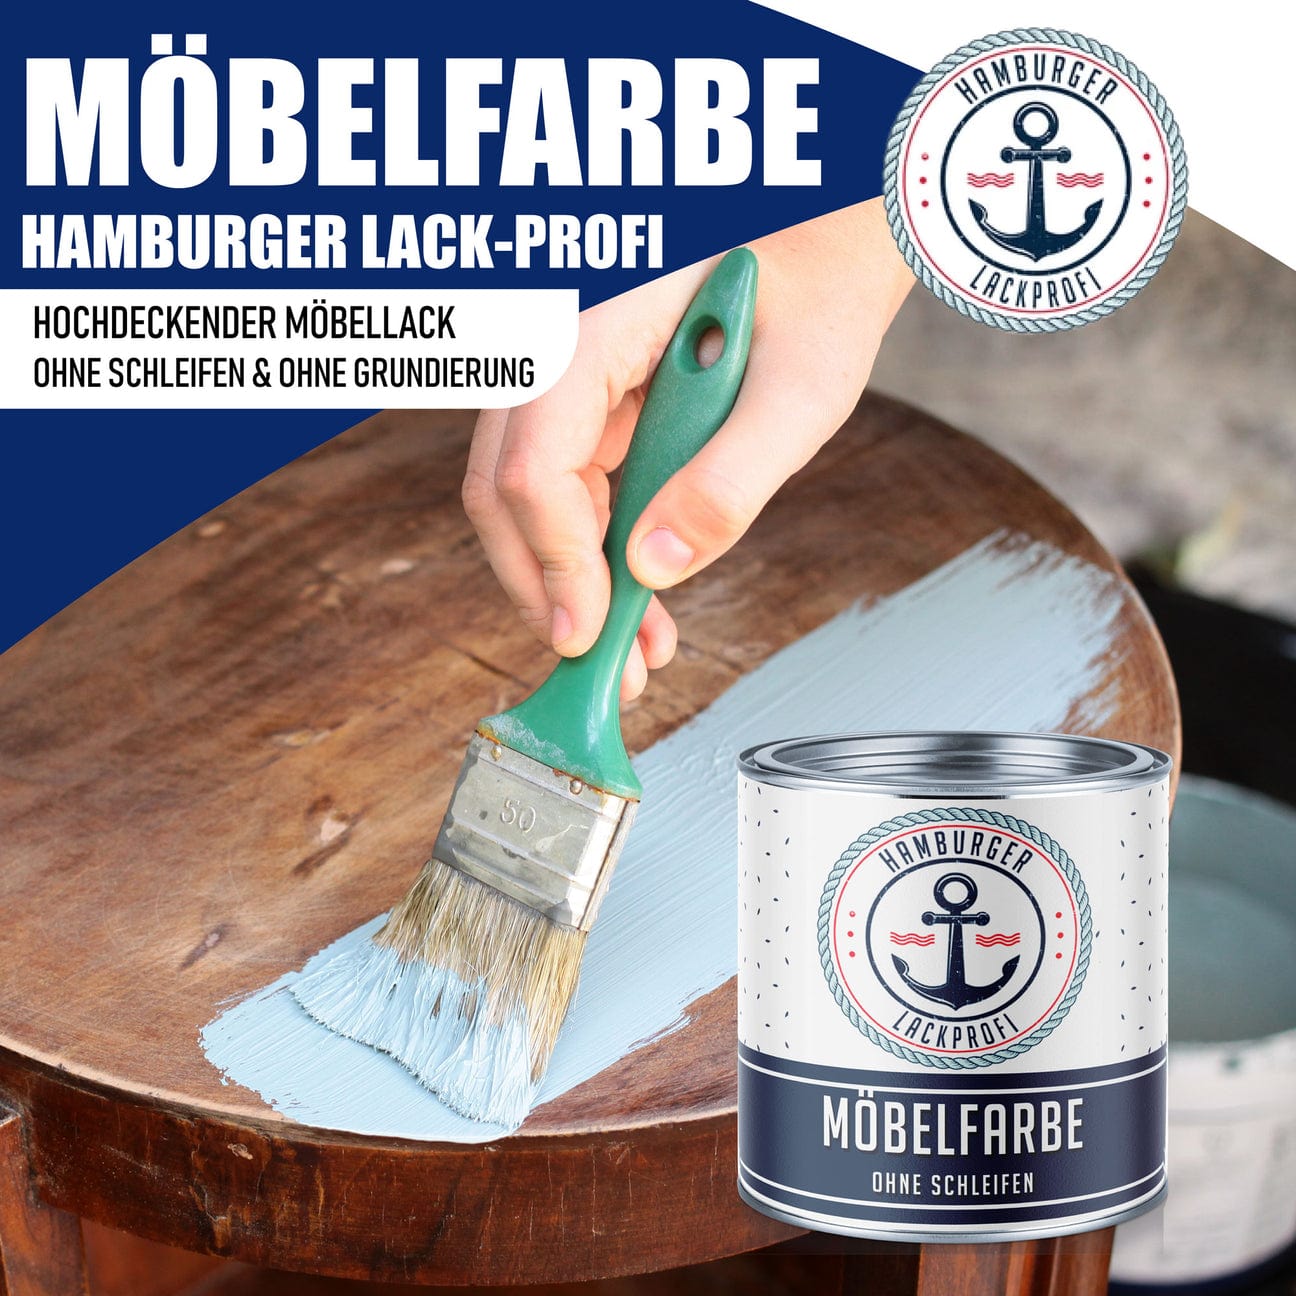 Hamburger Lack-Profi Möbelfarbe ohne Schleifen RAL 8028 Terrabraun - Möbellack Hamburger Lack-Profi